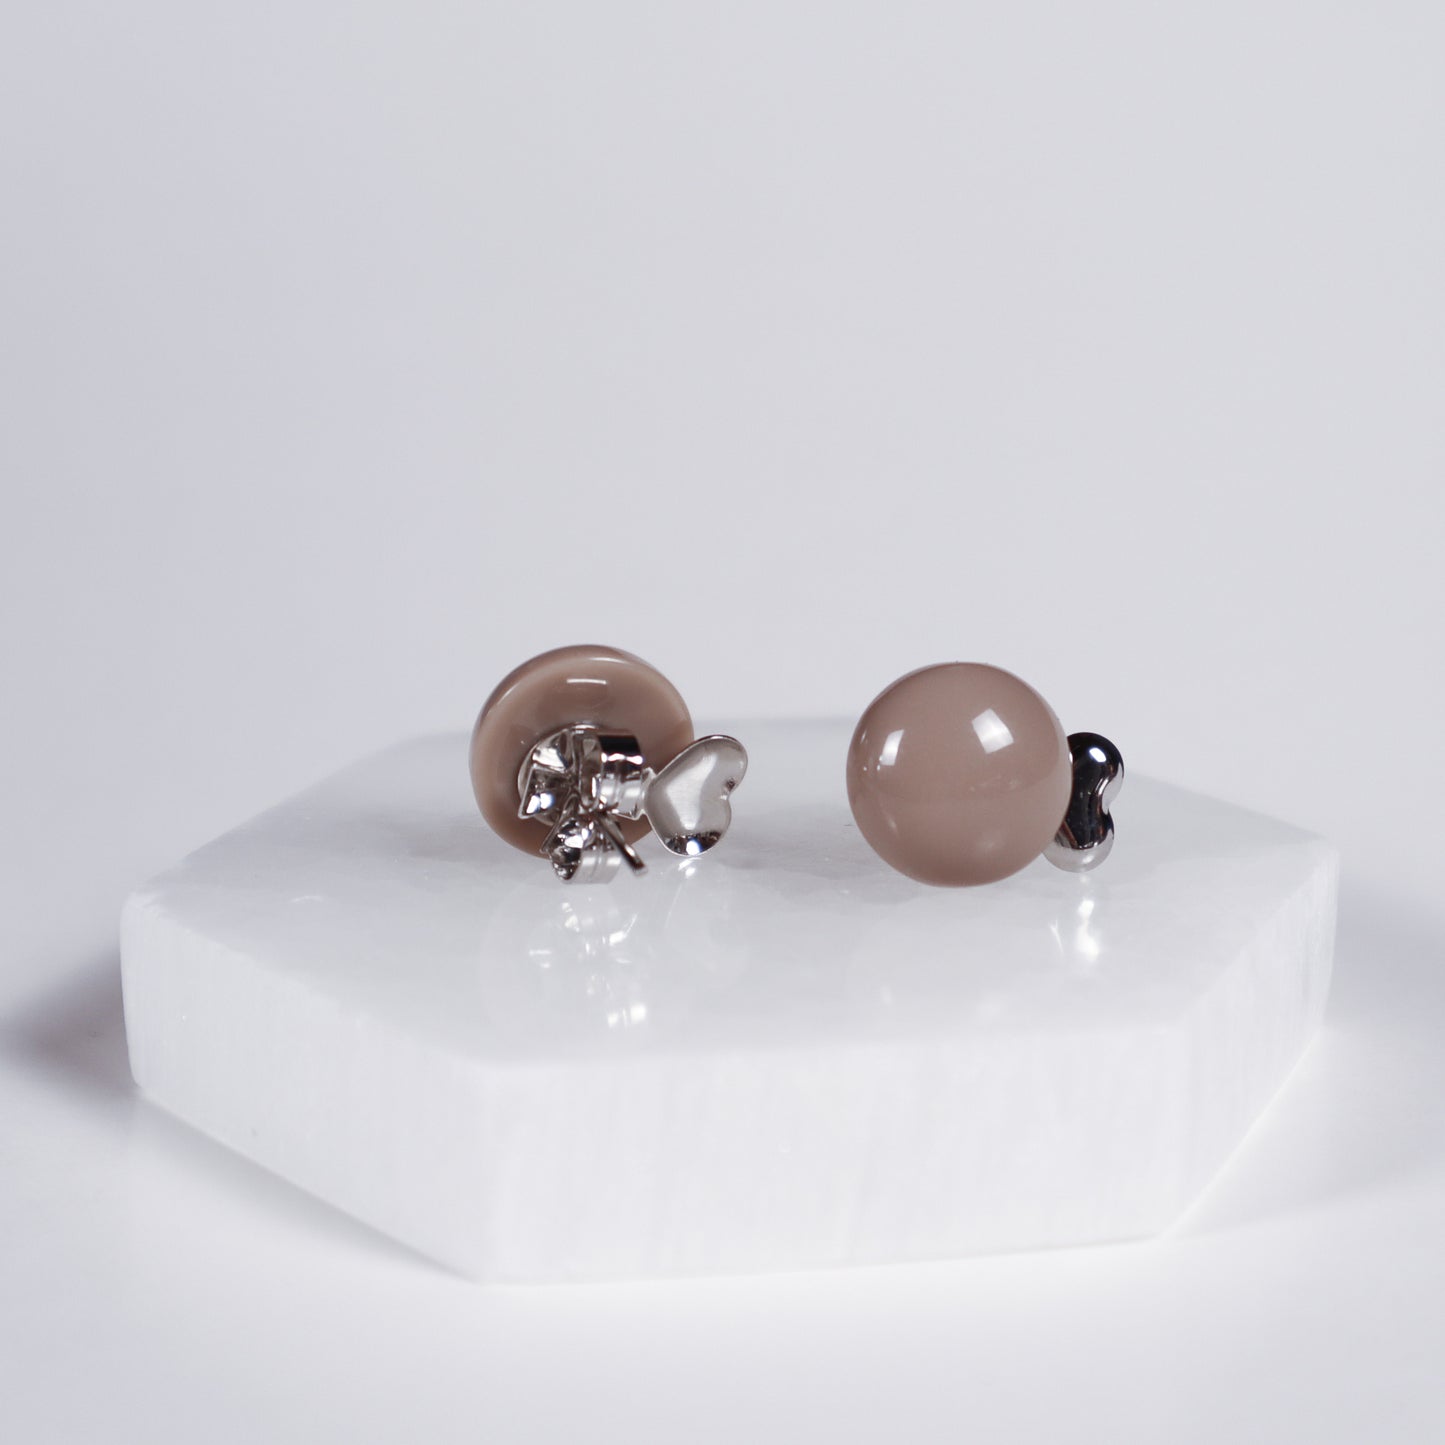 Mini Button Earrings - Oatmeal